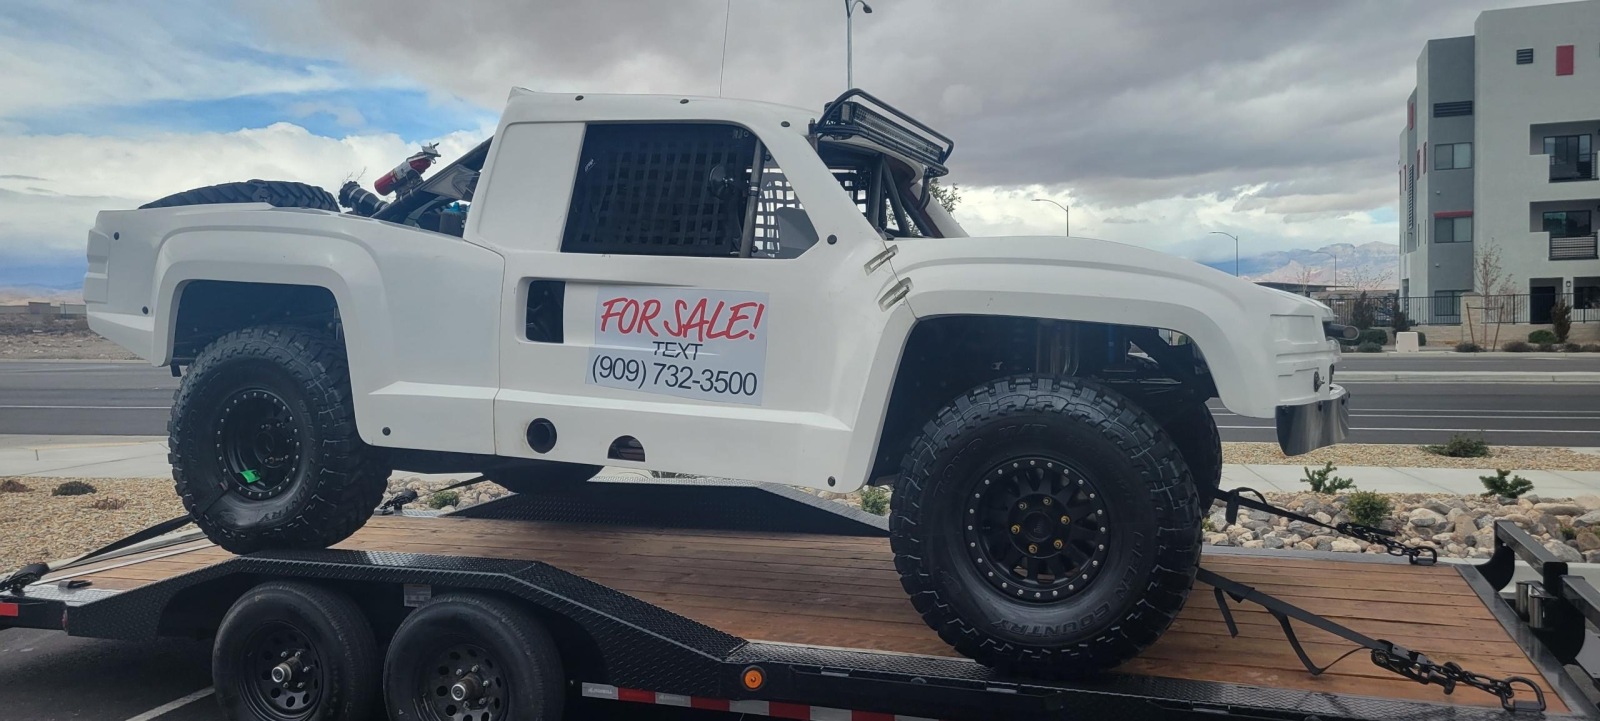 For Sale: Brand New Trophy Truck Ready for San Felipe  - photo0